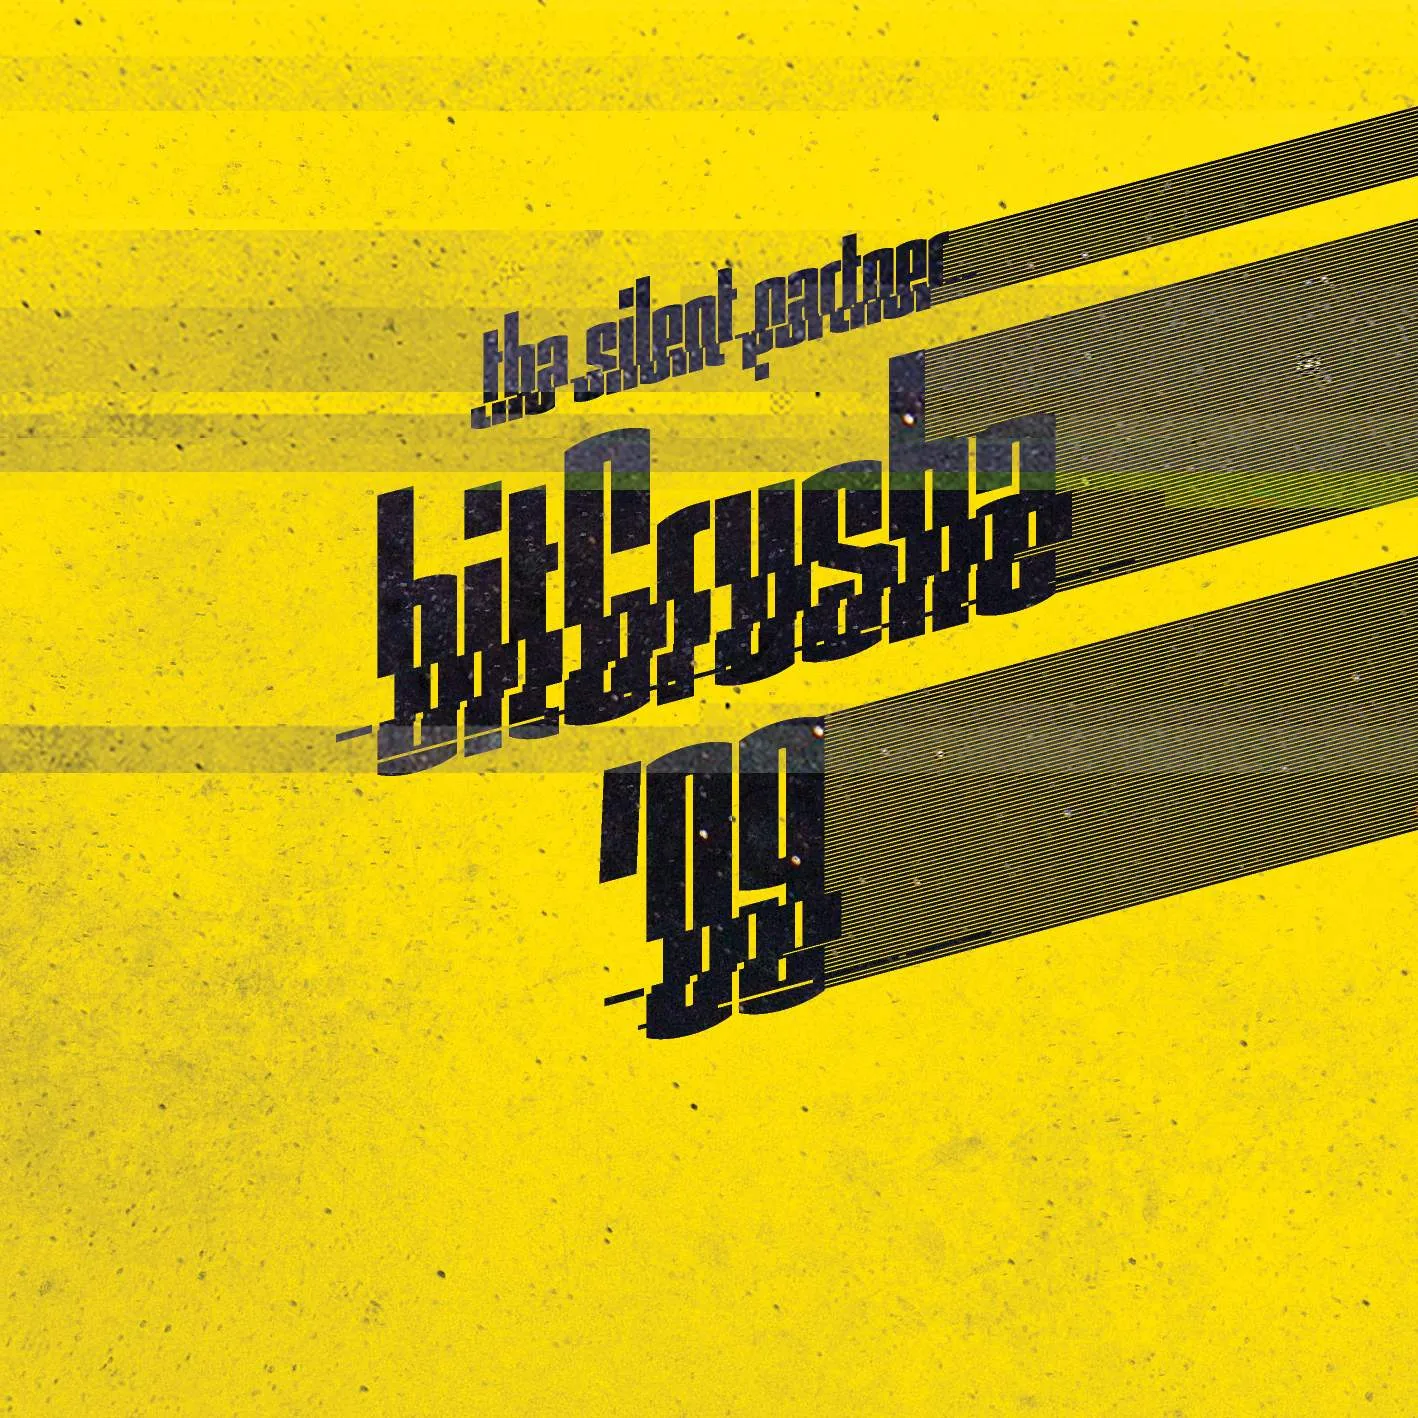 Album cover for “bitCrusha '09” by Tha Silent Partner